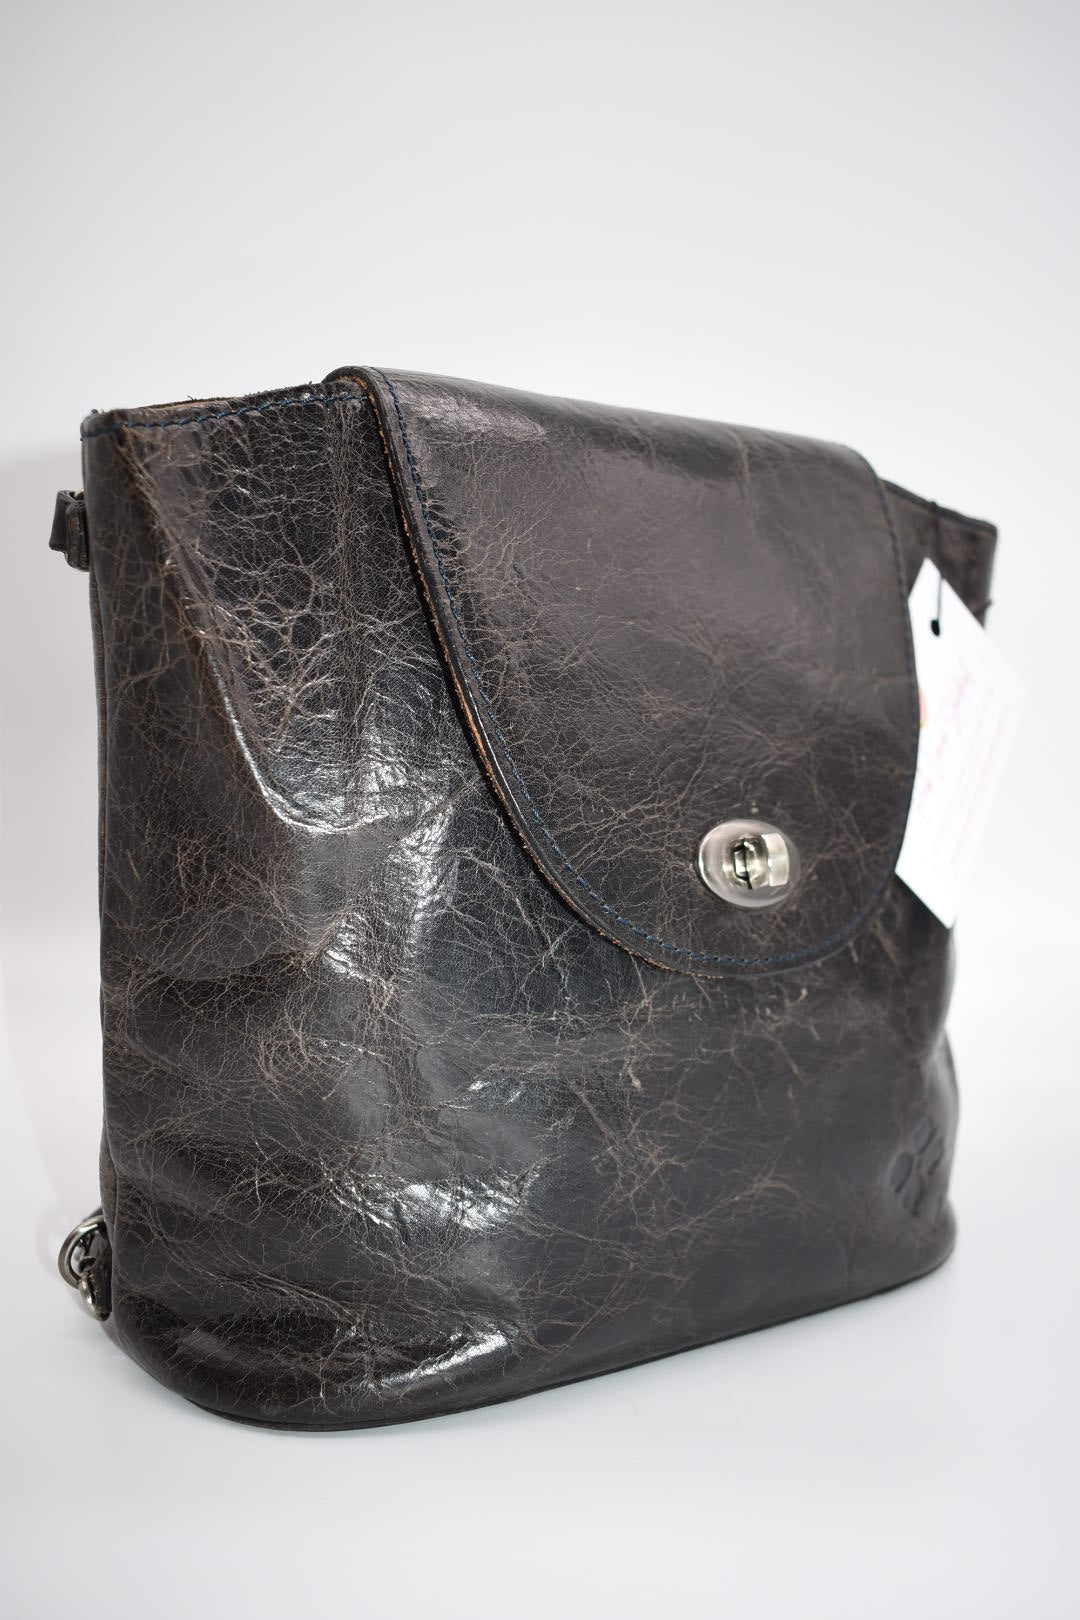 Patricia Nash Bellissimi Backpack in Distrassed Glaze